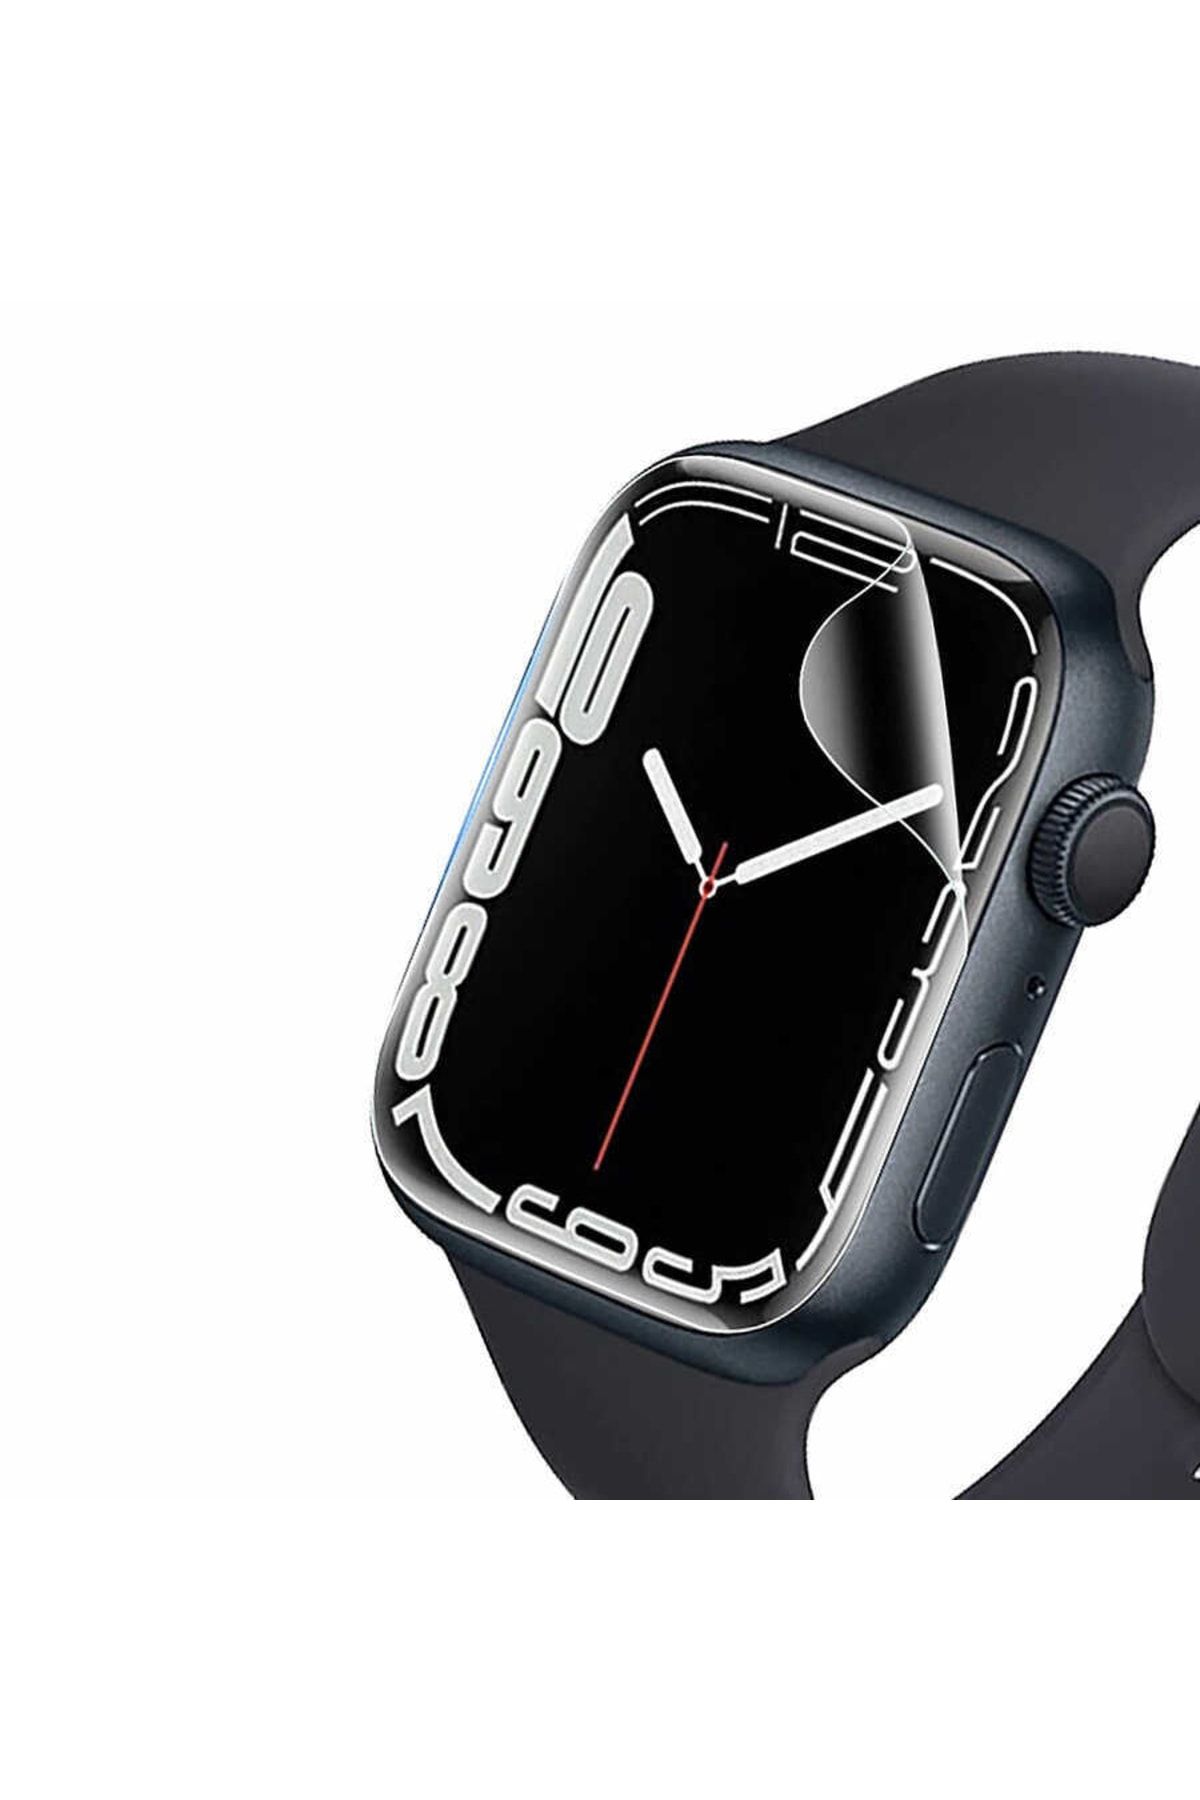 UnDePlus Apple Watch 7 8 9 41mm Full Ekran Nano Saat Koruyucu Narr Tpu